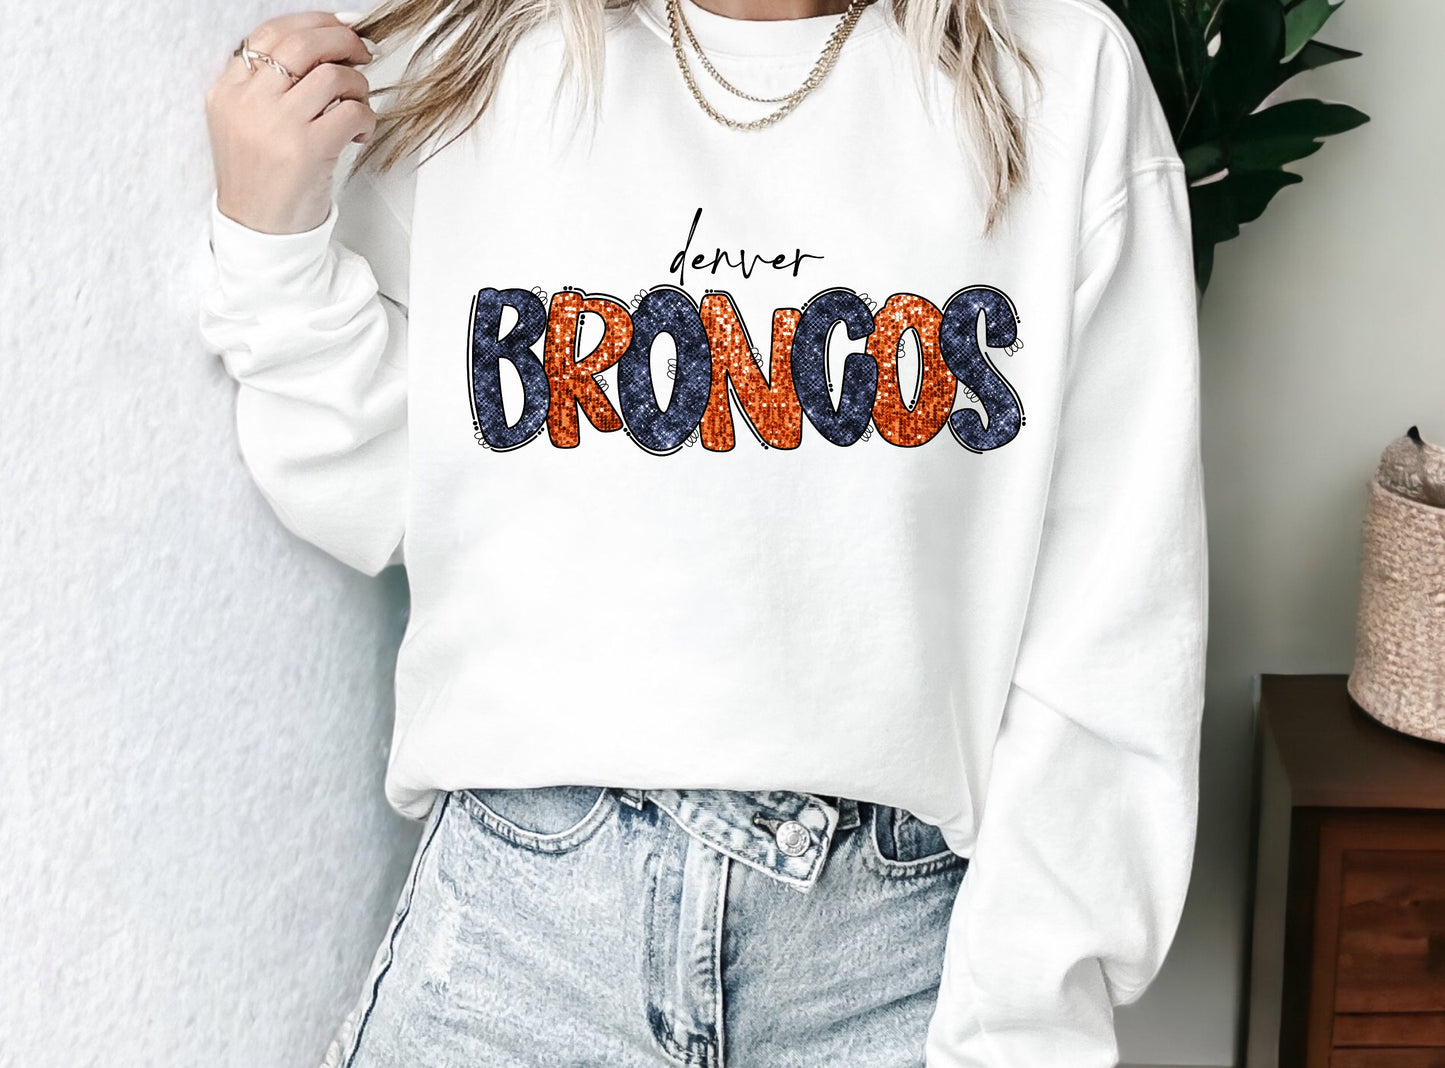 Broncos - Bling [PREORDER]